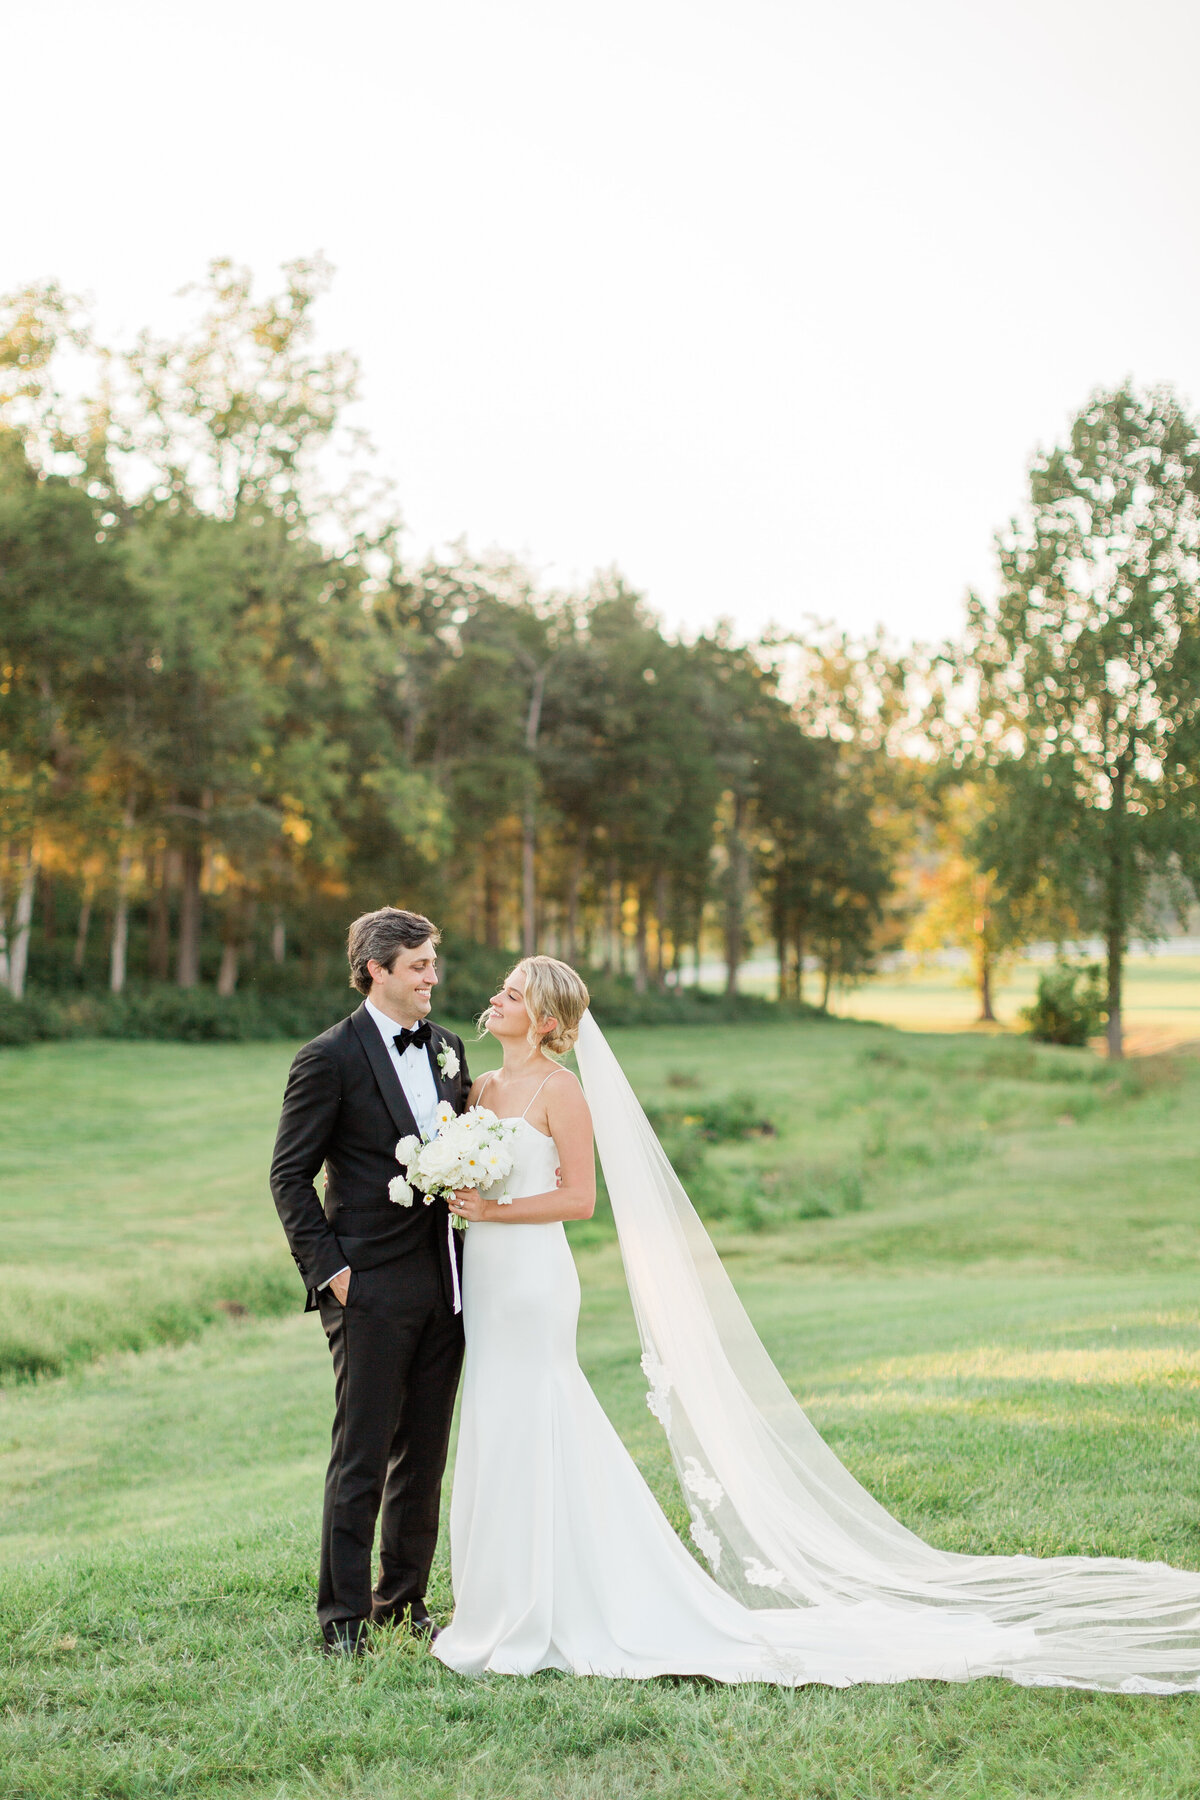 Matt&Carson-CastleHillCider-Charlottesville-Wedding-KelseyMariePhotography-September2021-4196